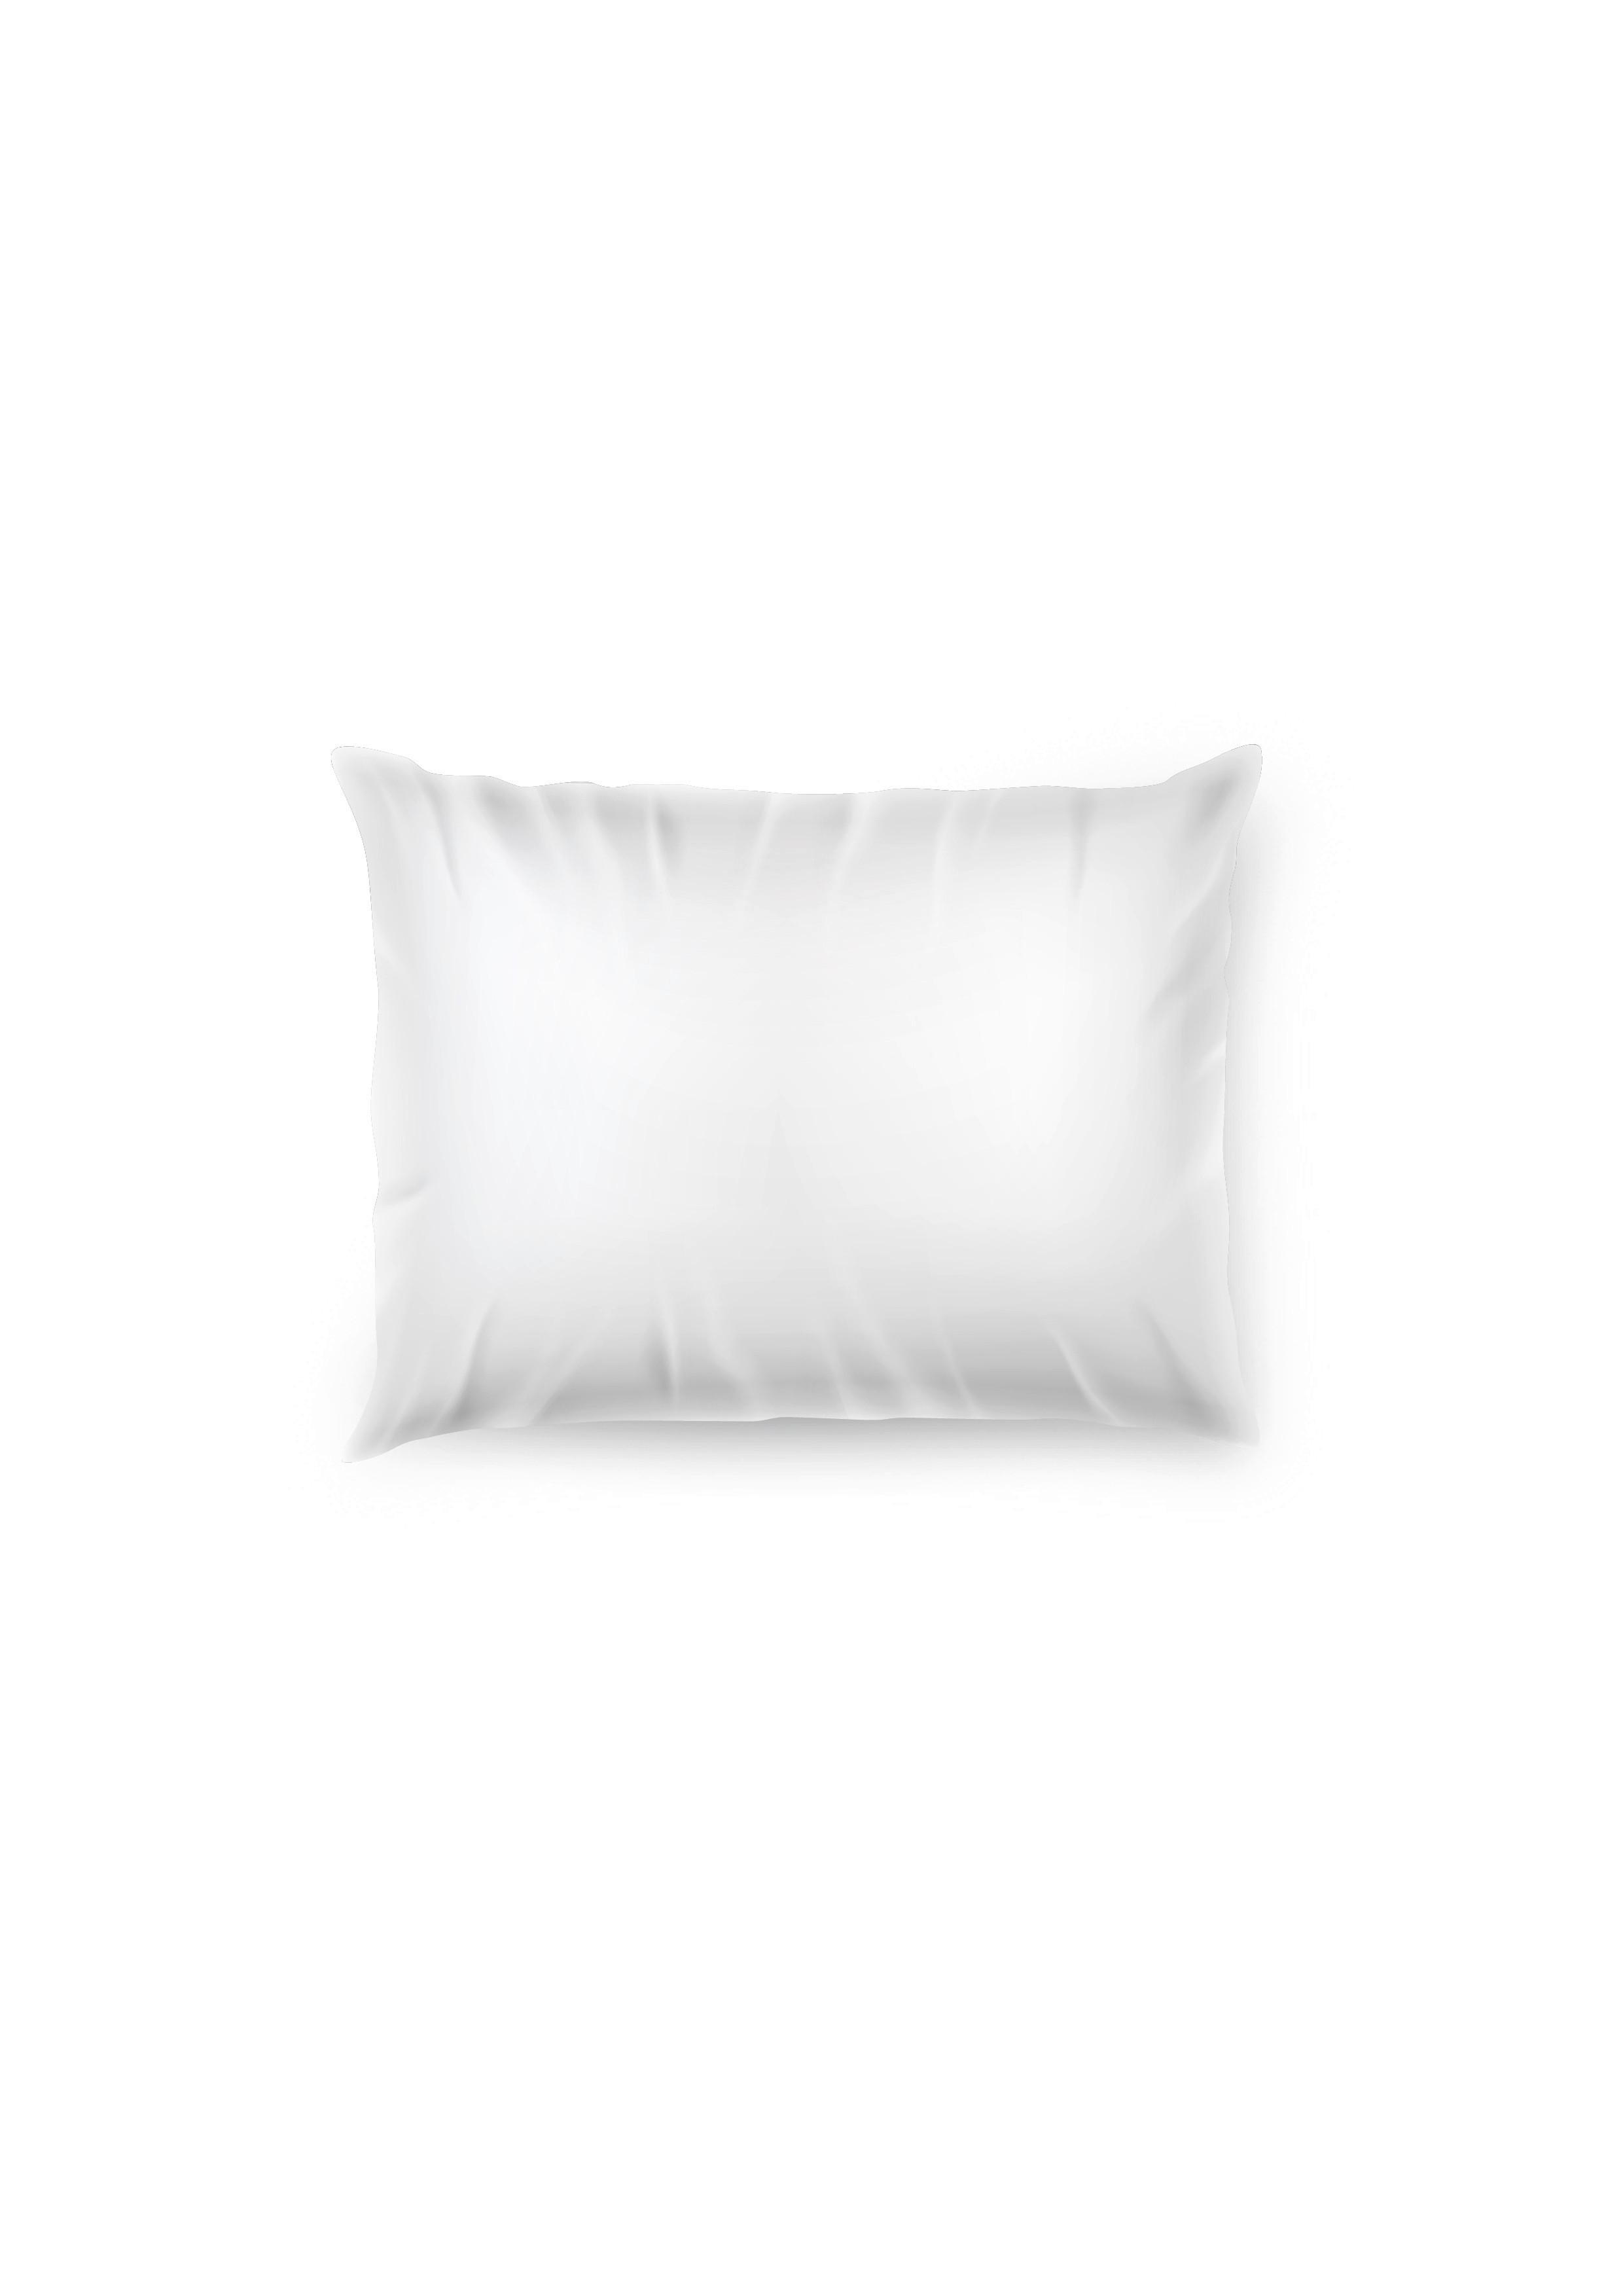 Jastučnica 70/90cm Annika - bijela, tekstil (70/90cm) - Modern Living